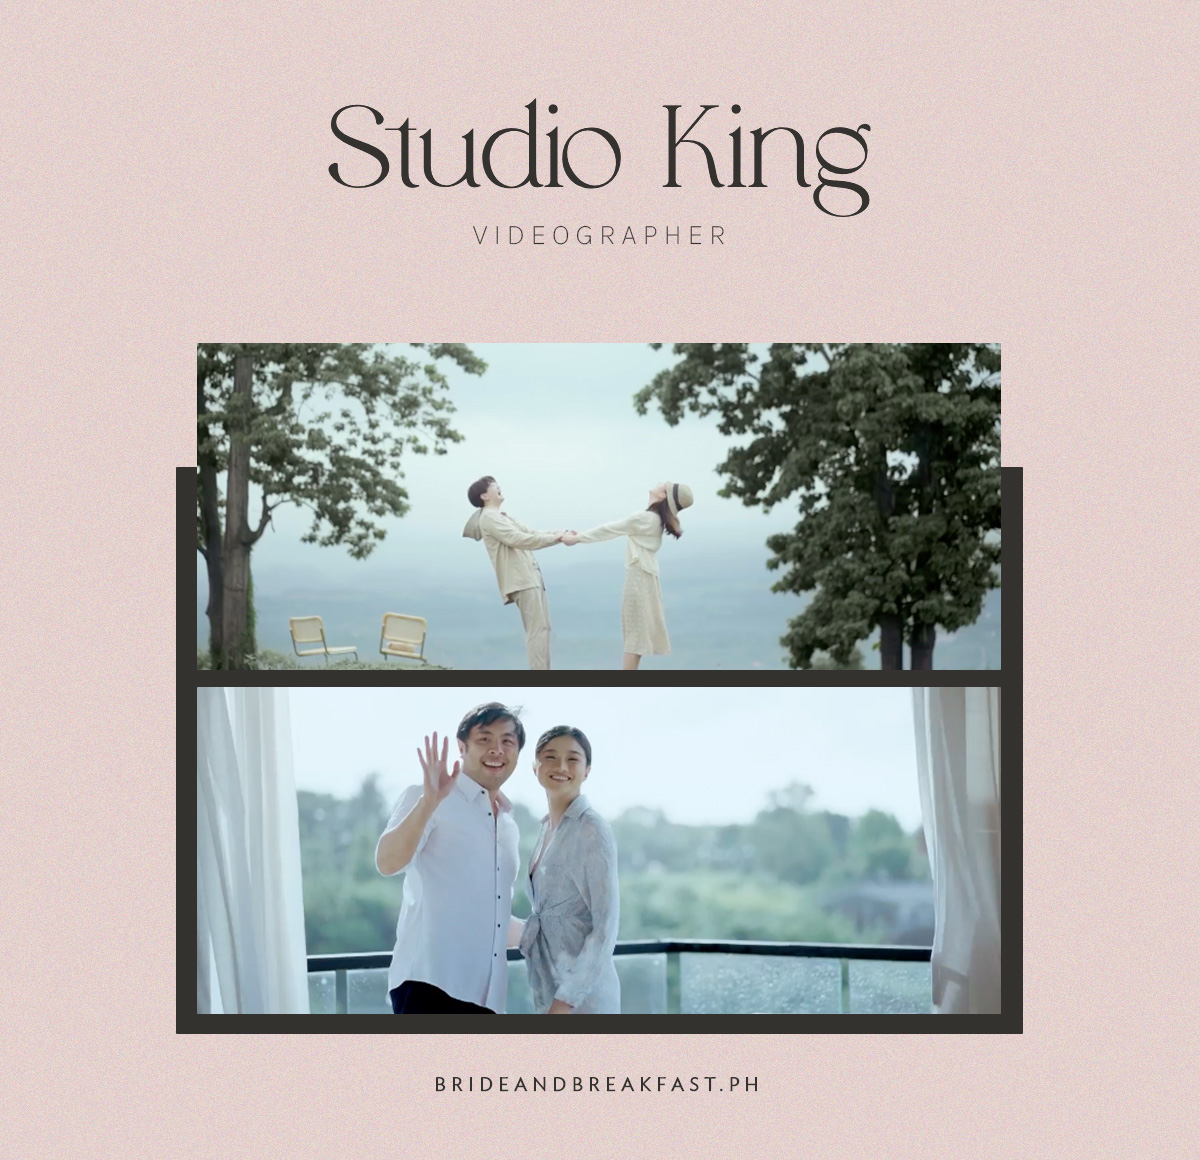 Studio King